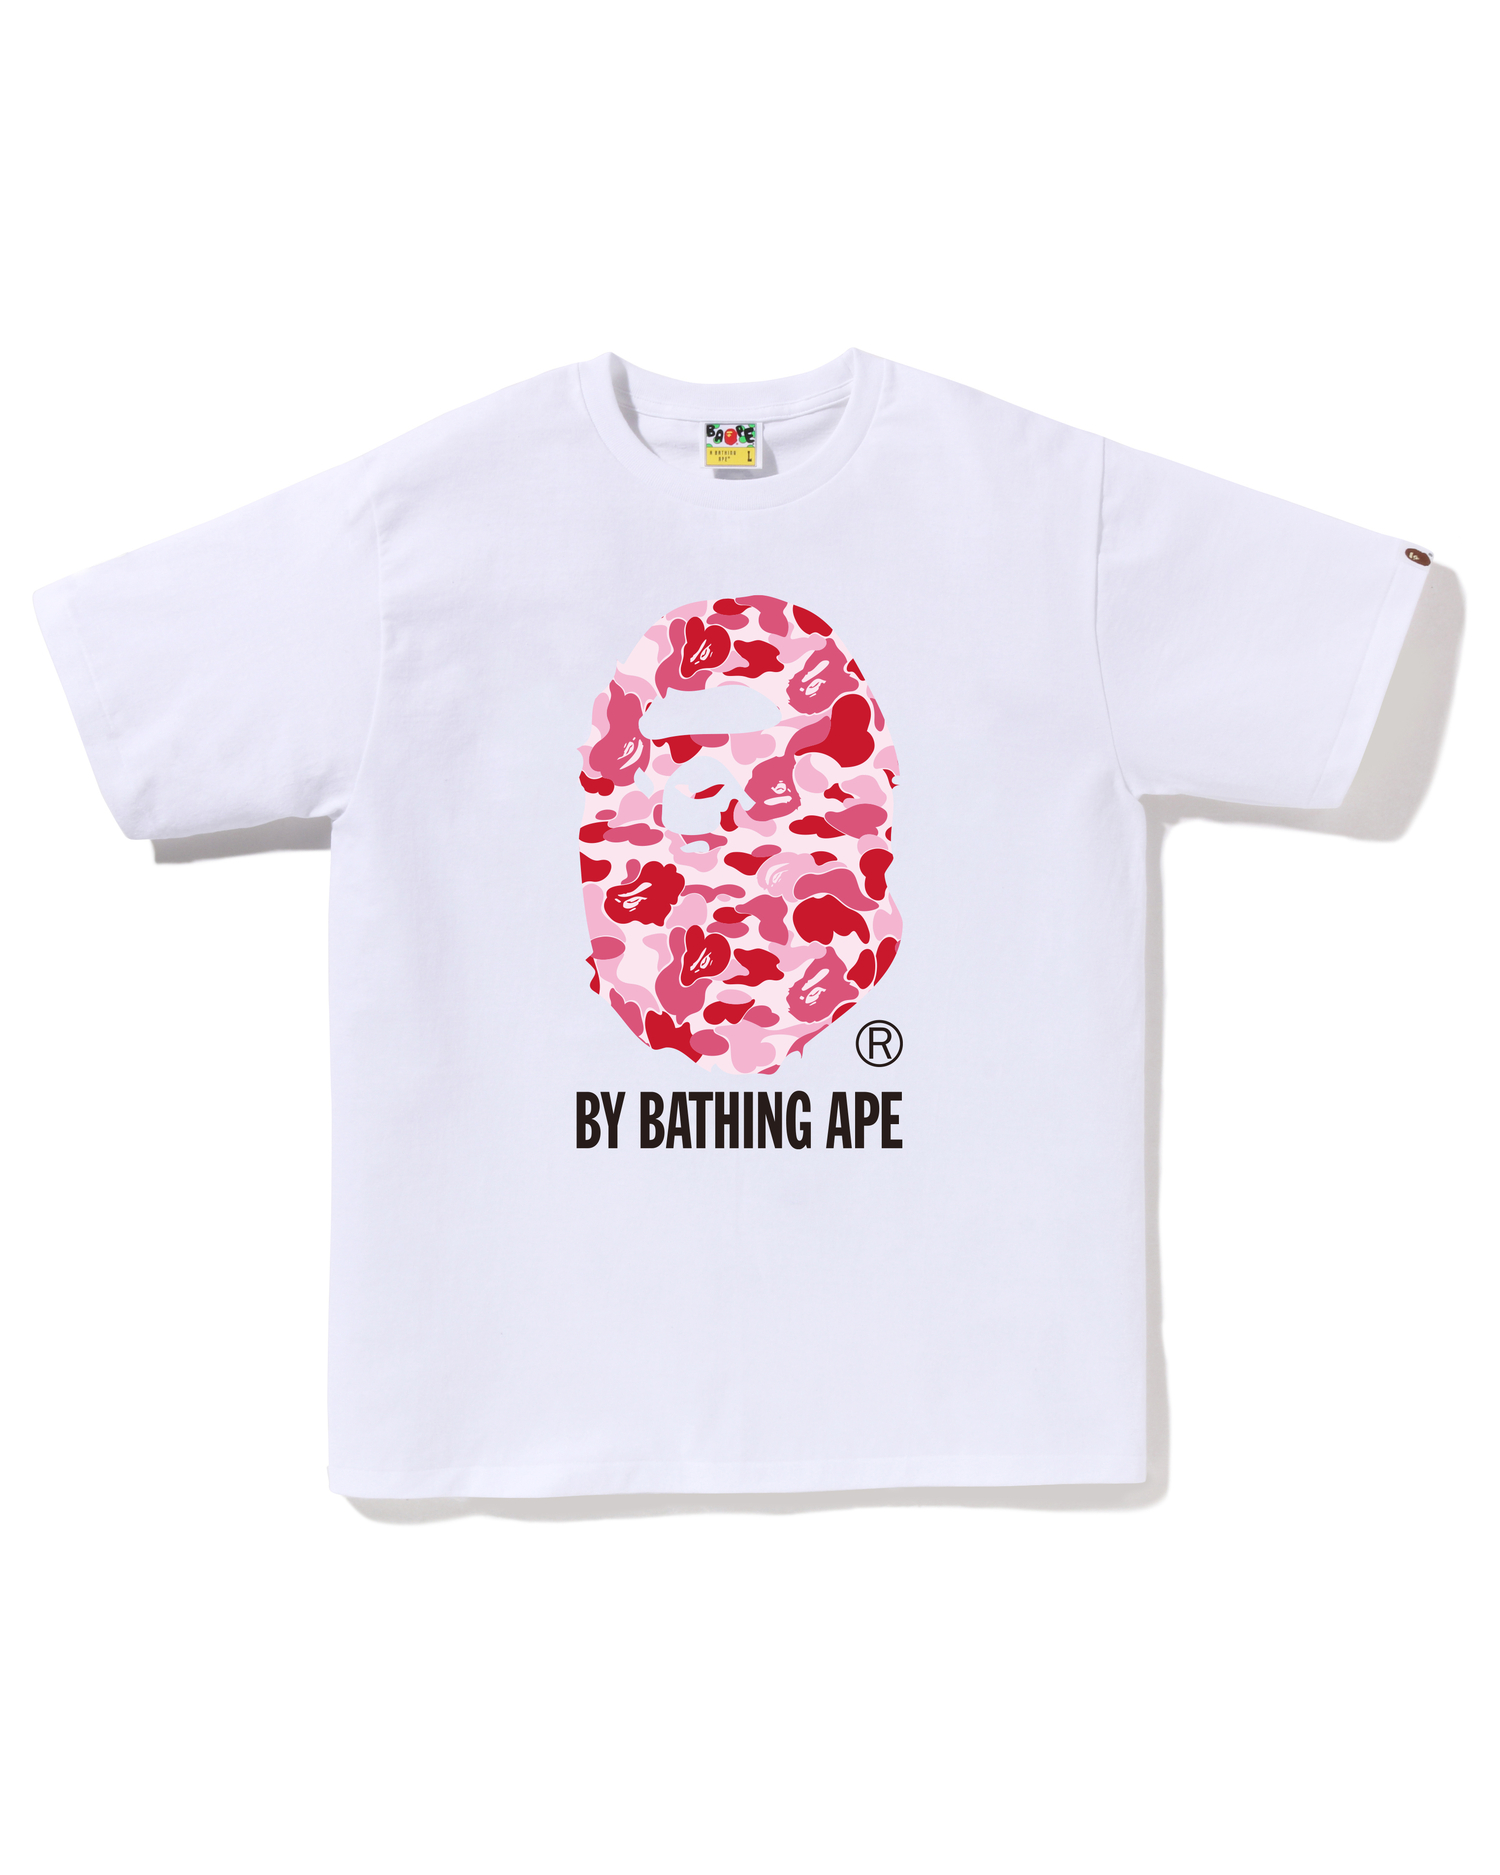 Shop ABC Camo By Bathing Ape Tee Online | BAPE